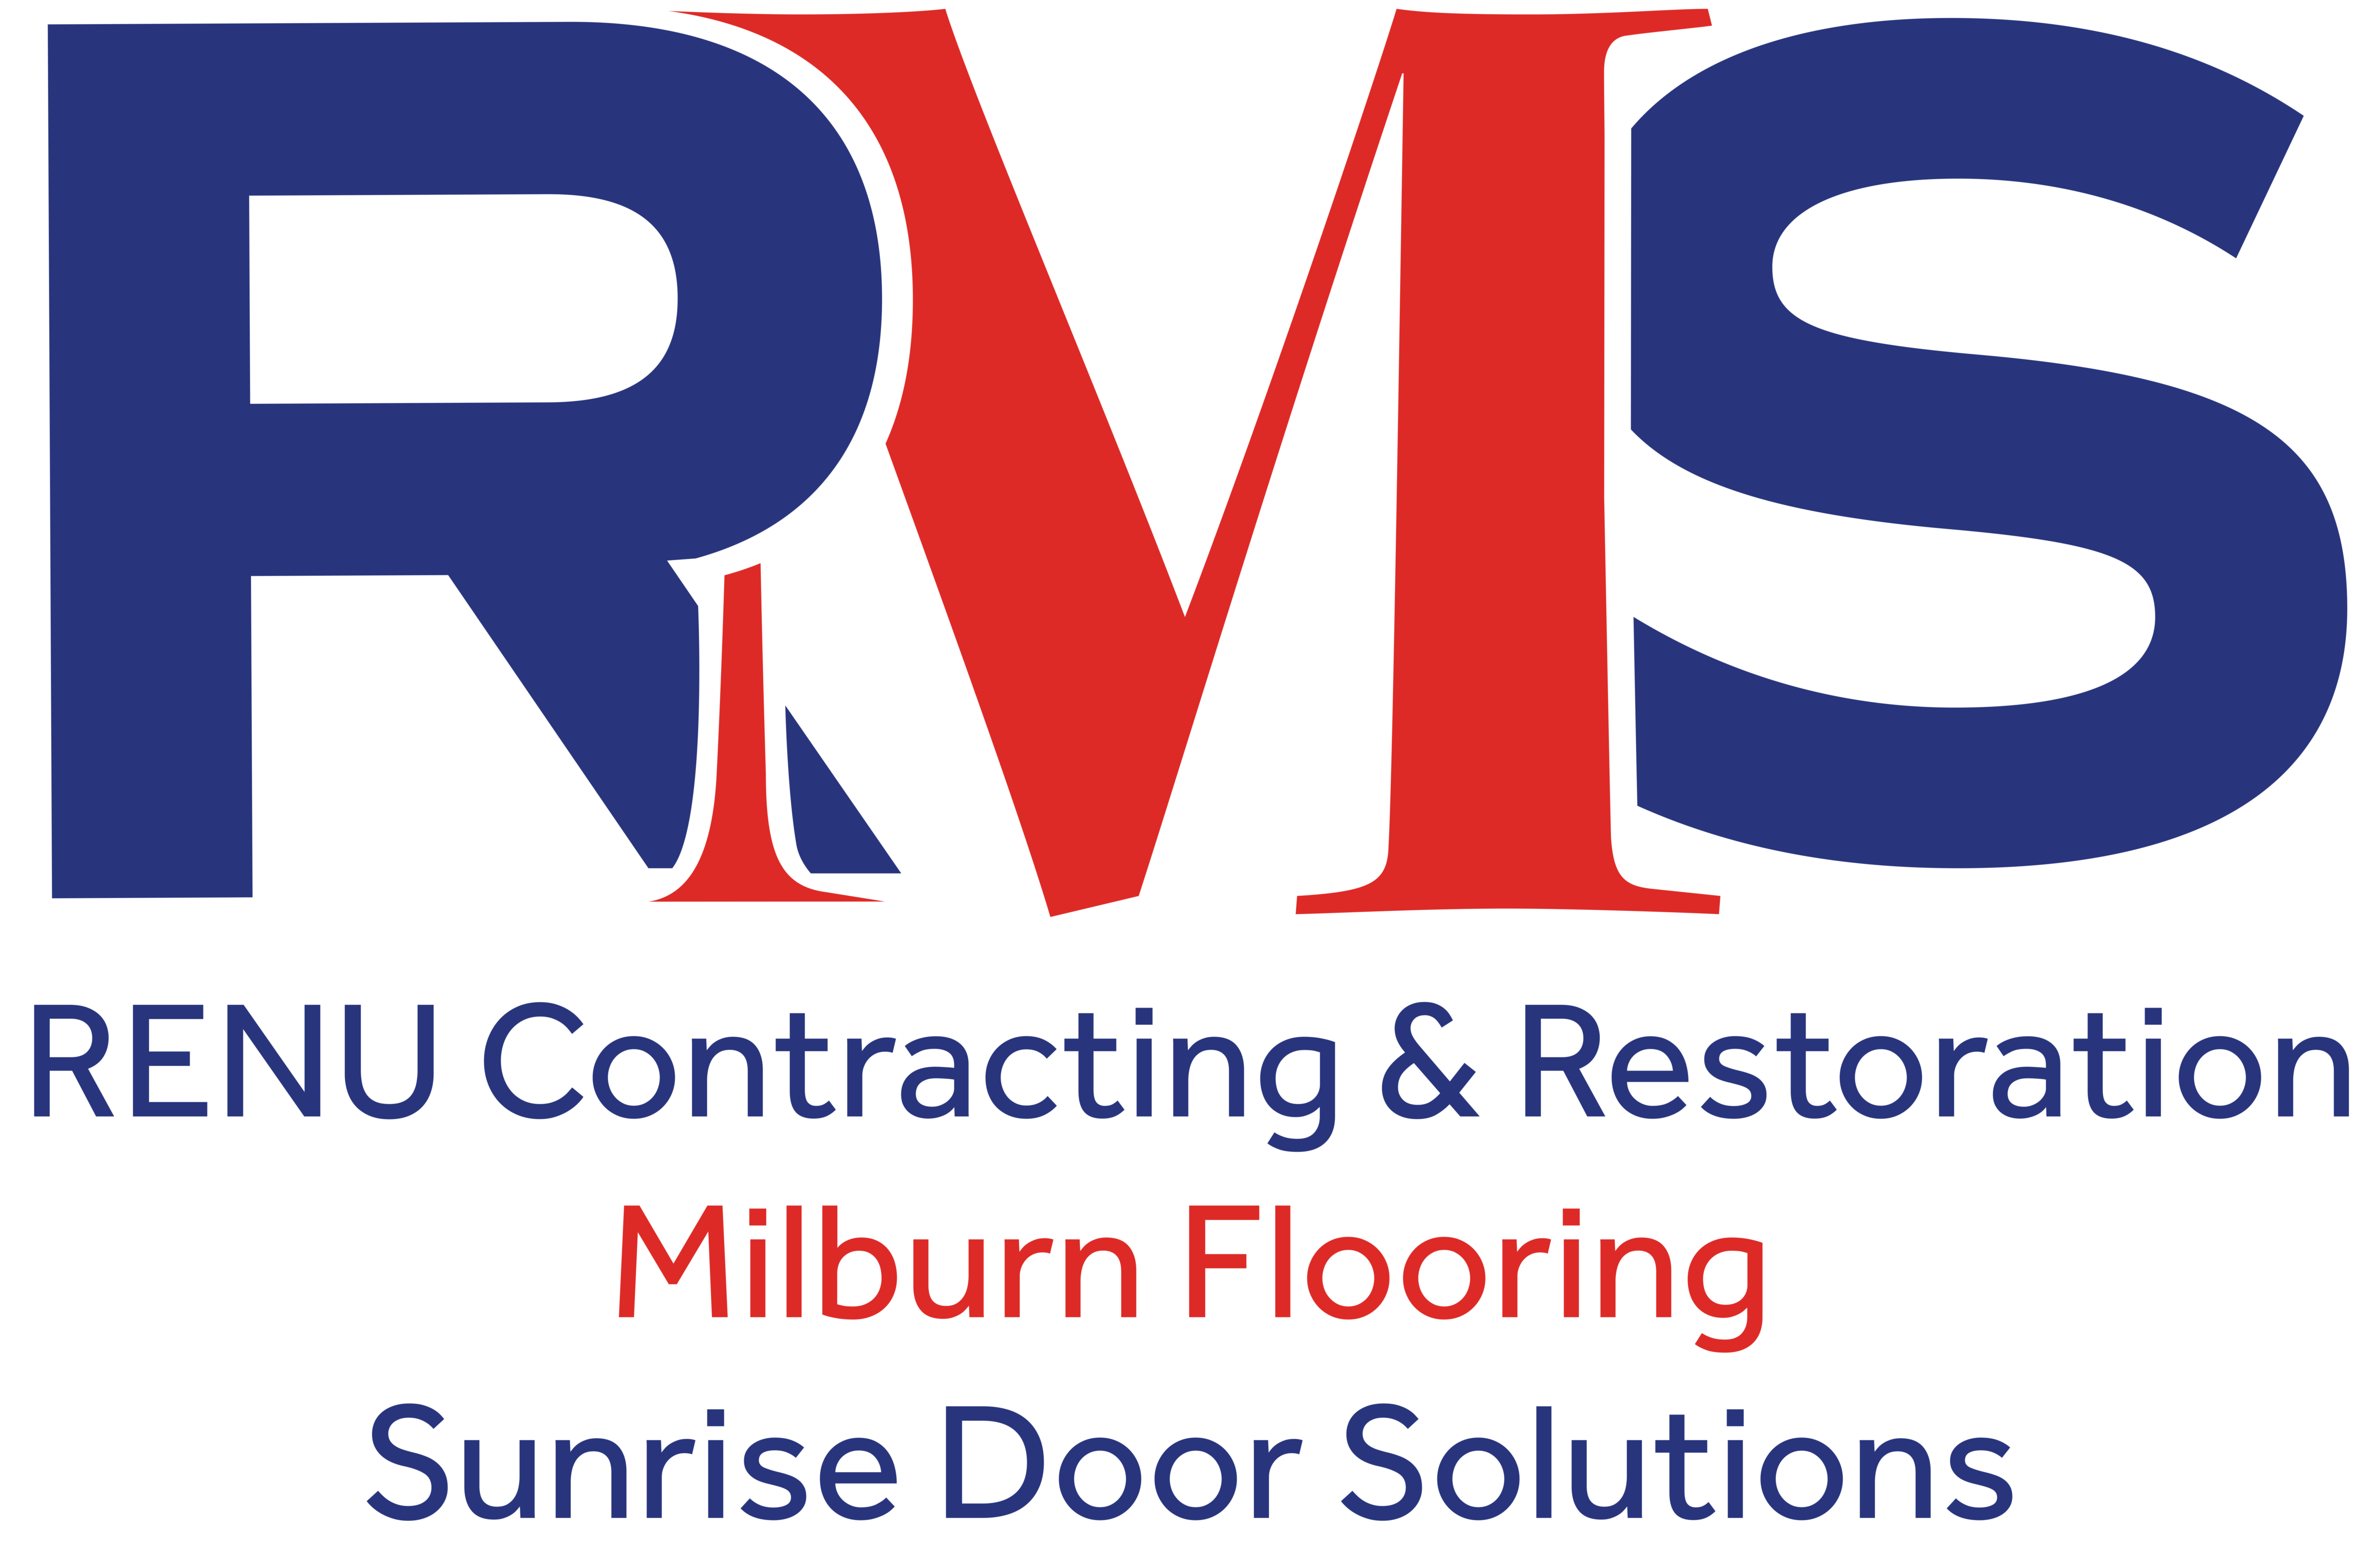 Renu Contracting & Restoration logo